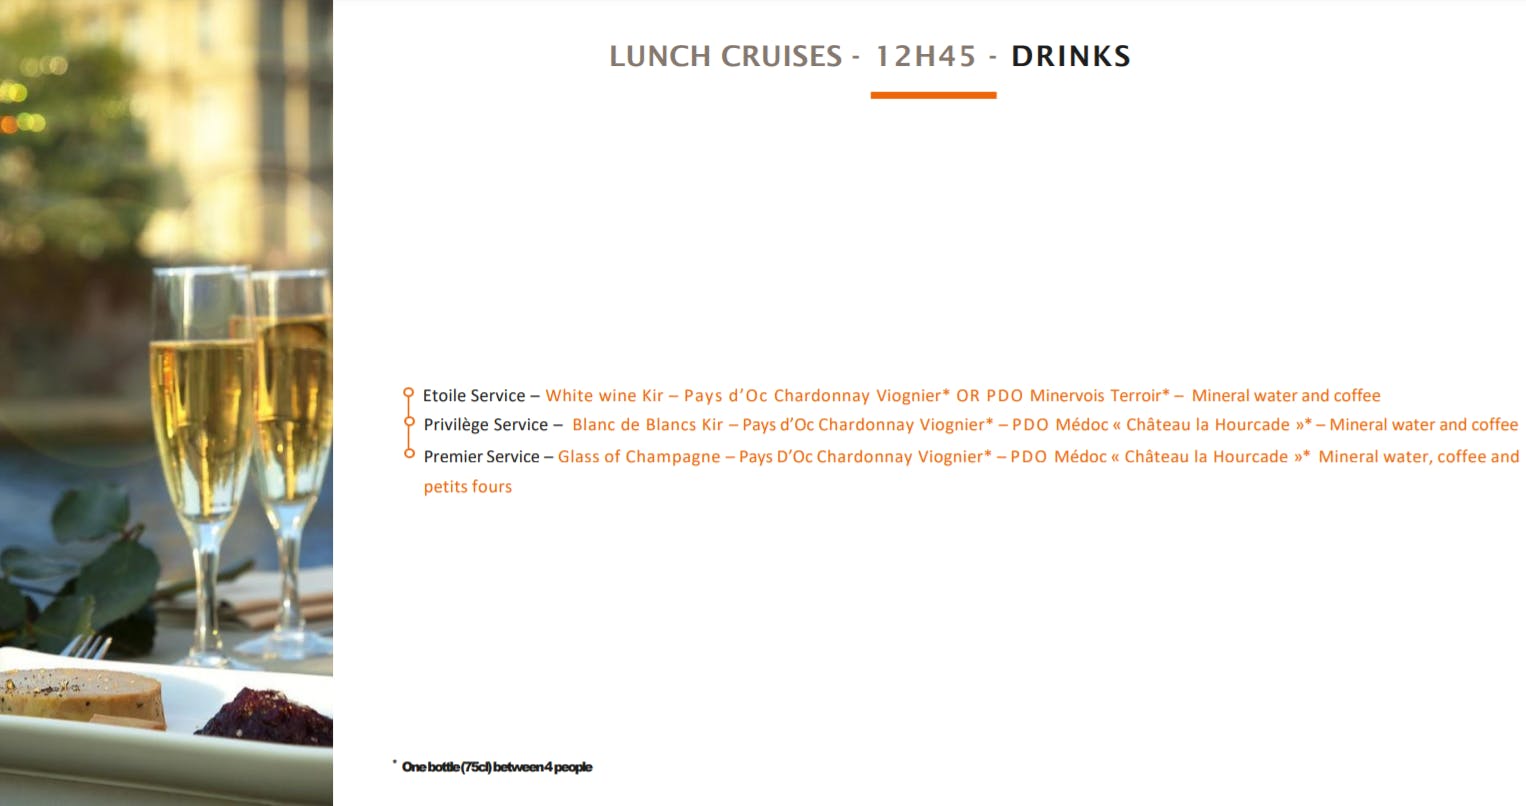 bateaux parisiens lunch cruise drinks.PNG